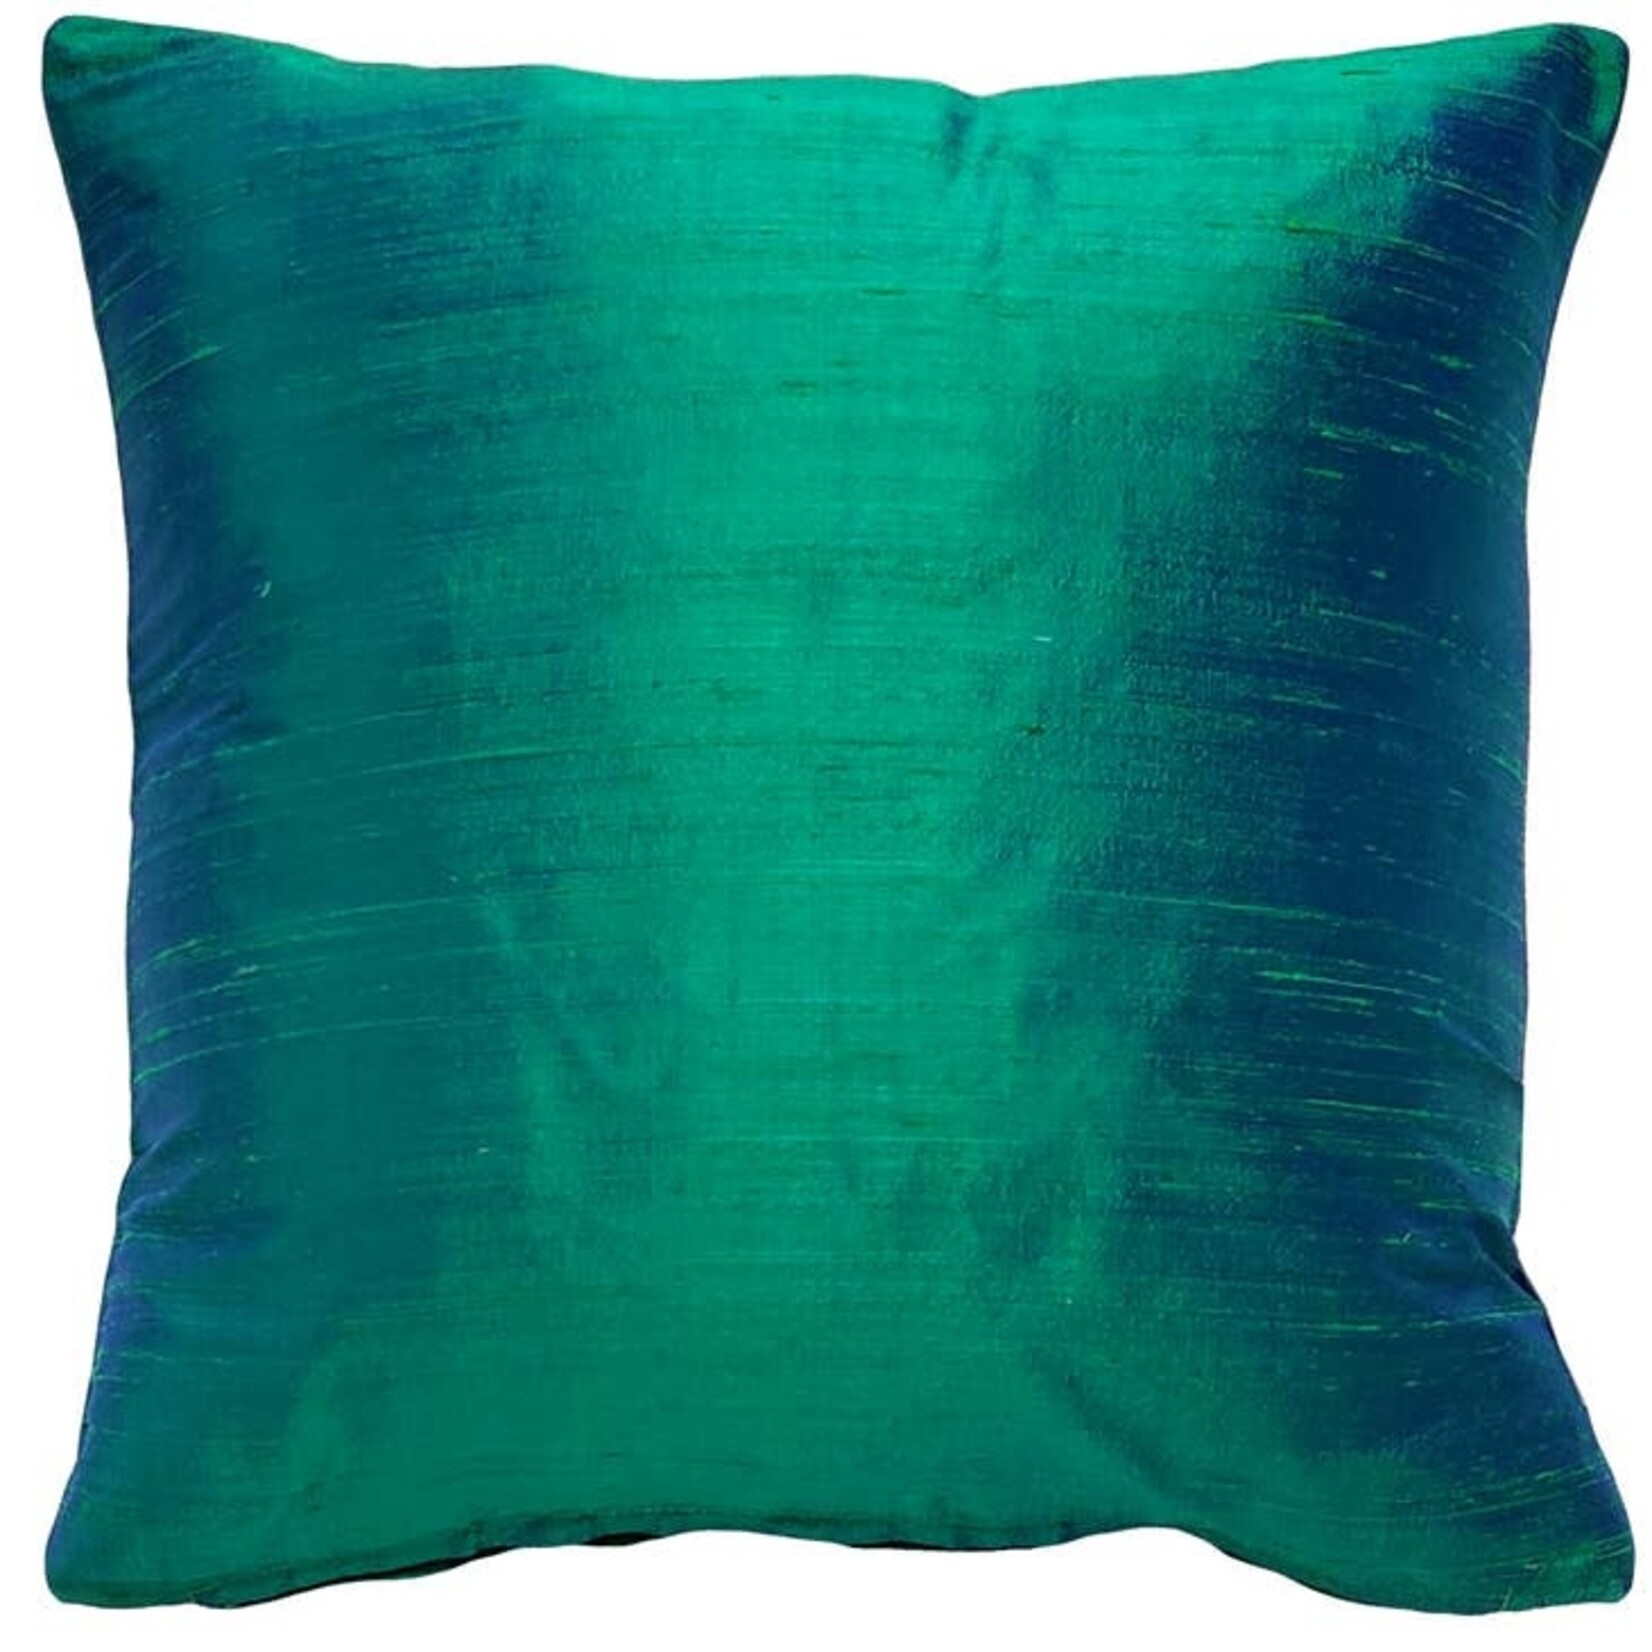 Sankara Emerald Green Silk Throw Pillow 18x18